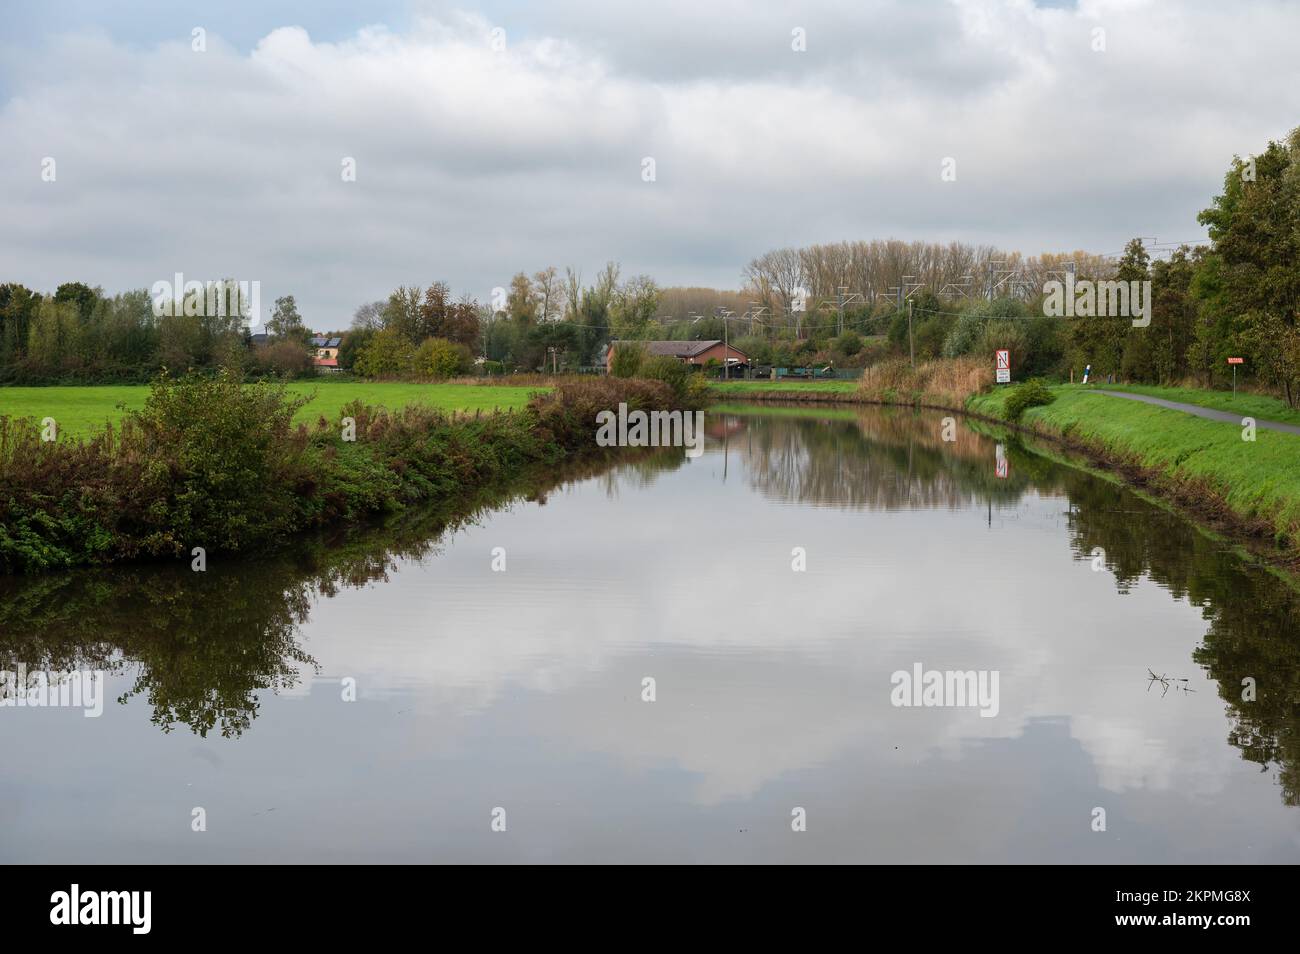 Liedekerke, Regione fiamminga orientale, Belgio, 11 04 2022 - natura e industria riflettono nel fiume Dender Foto Stock